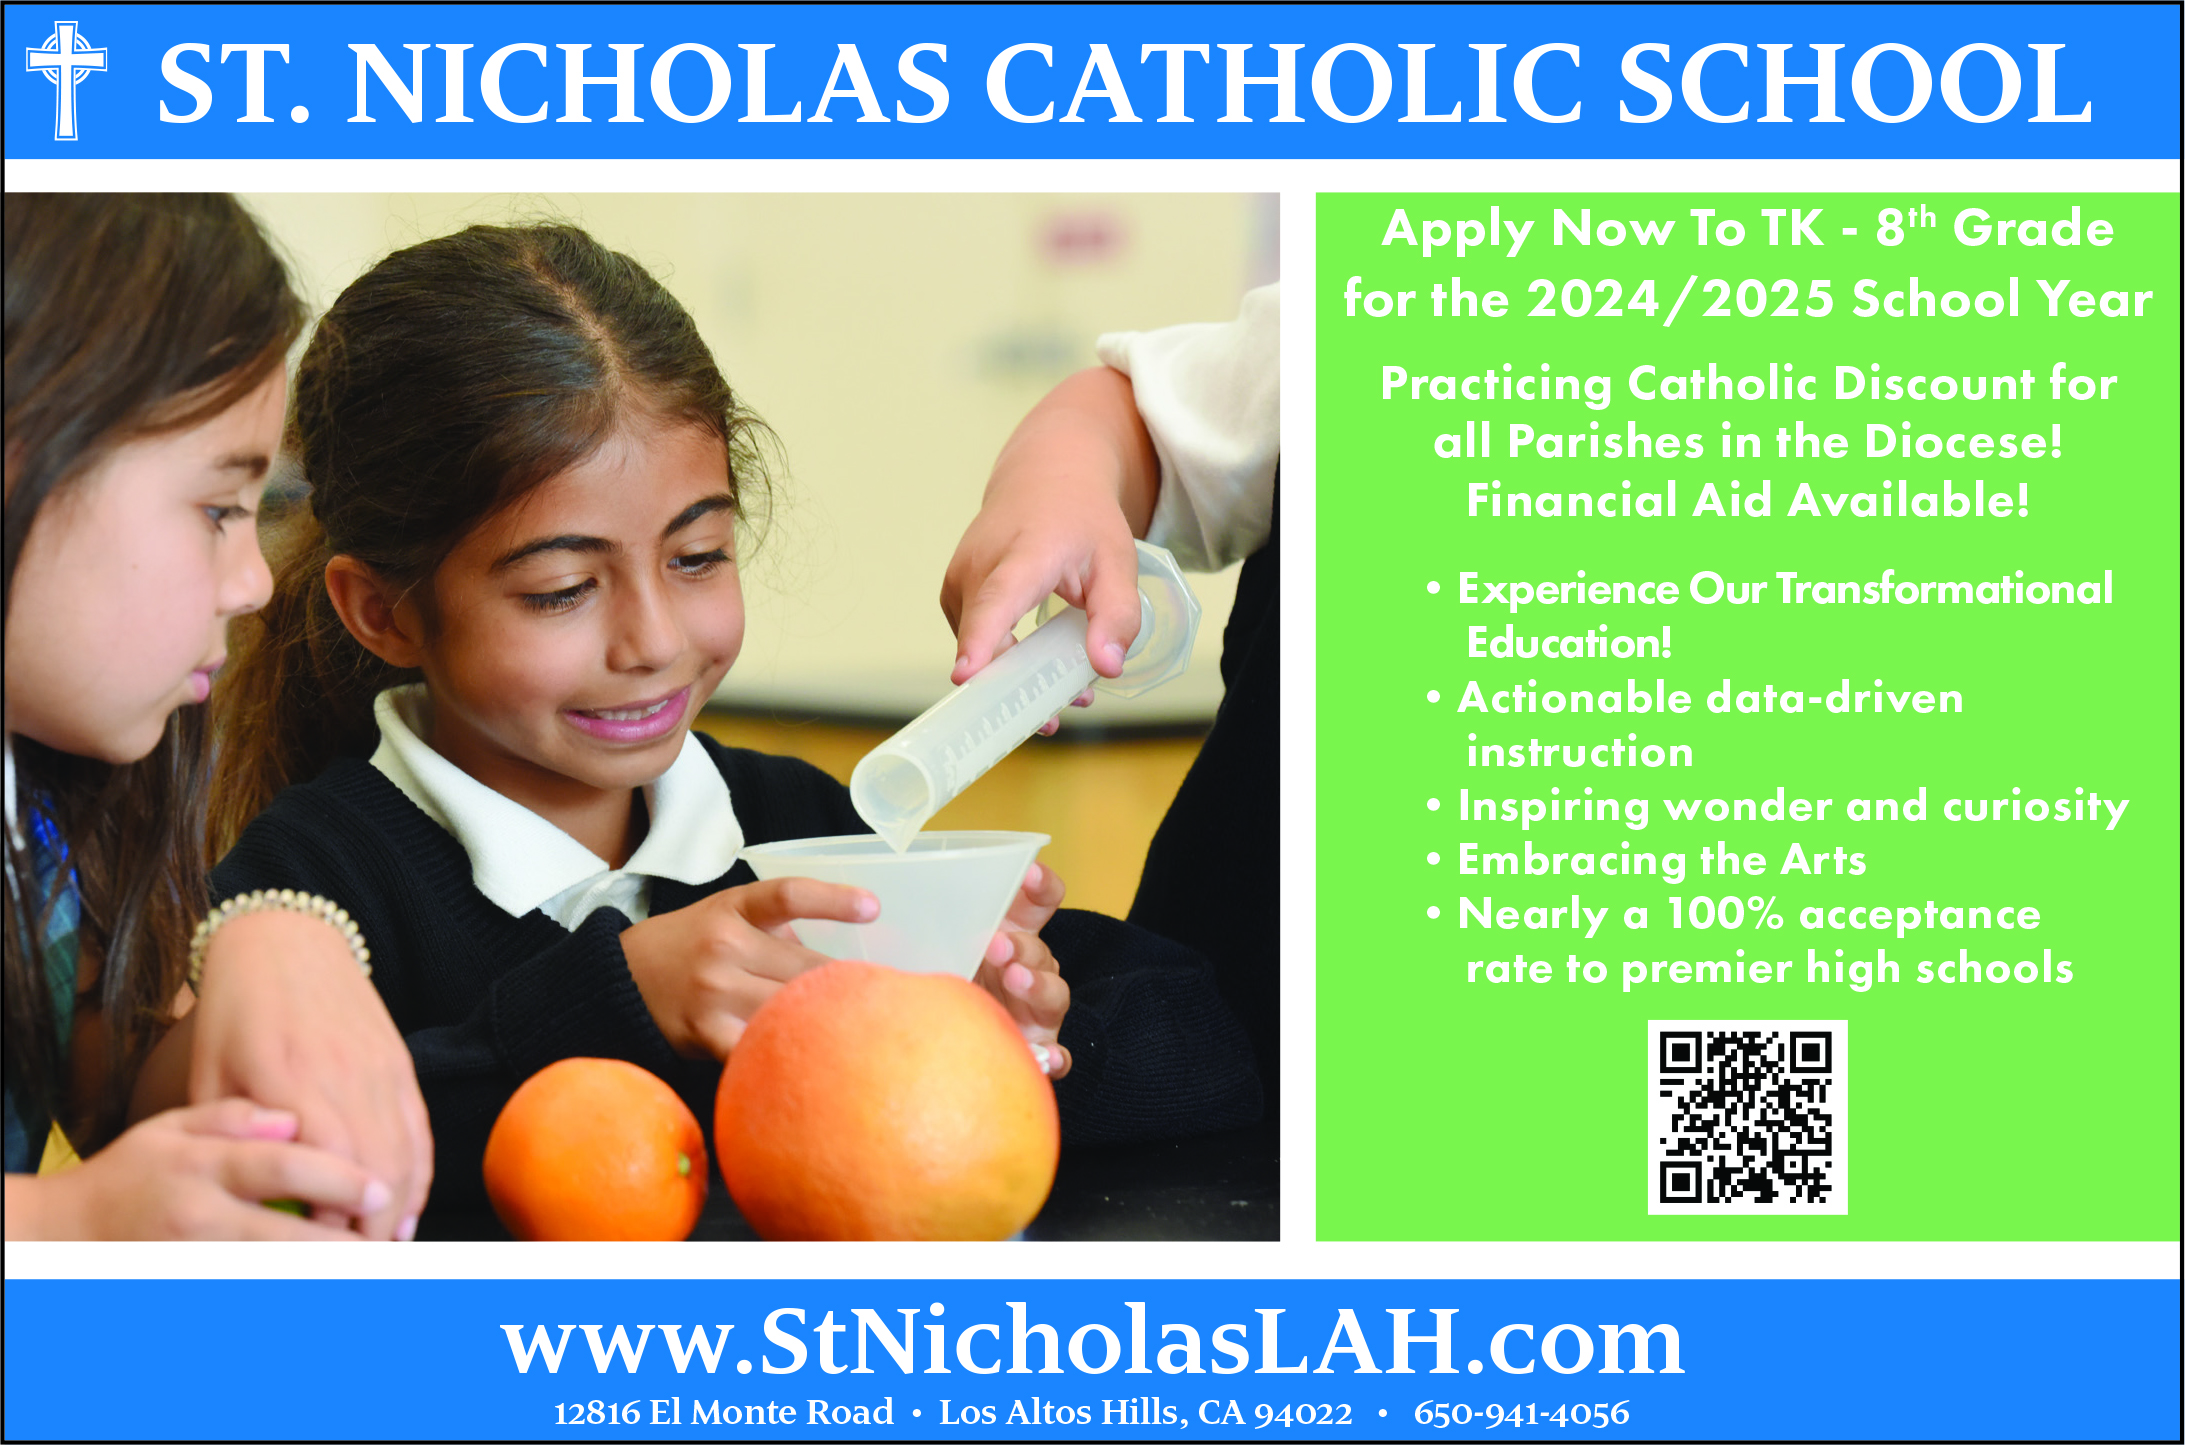 St. Nicholas Catholic School Open Enrollment for 2024-2025